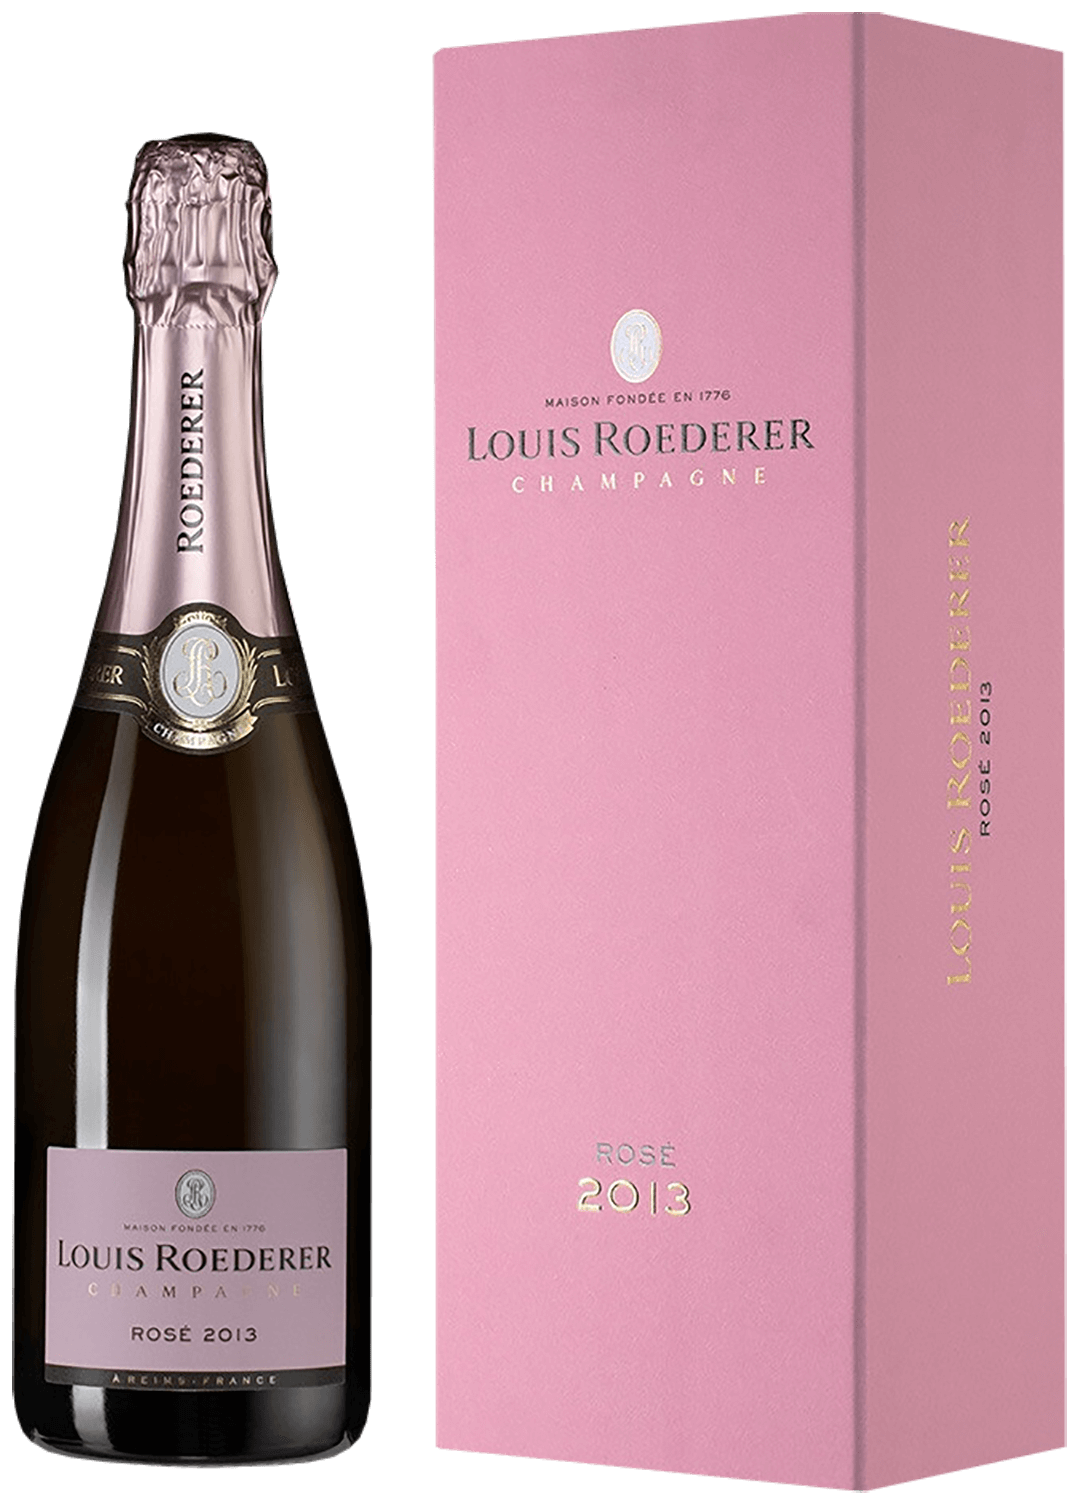 Brut Rose Champagne AOC Louis Roederer (gift box) ruinart rose brut champagne aoc gift box